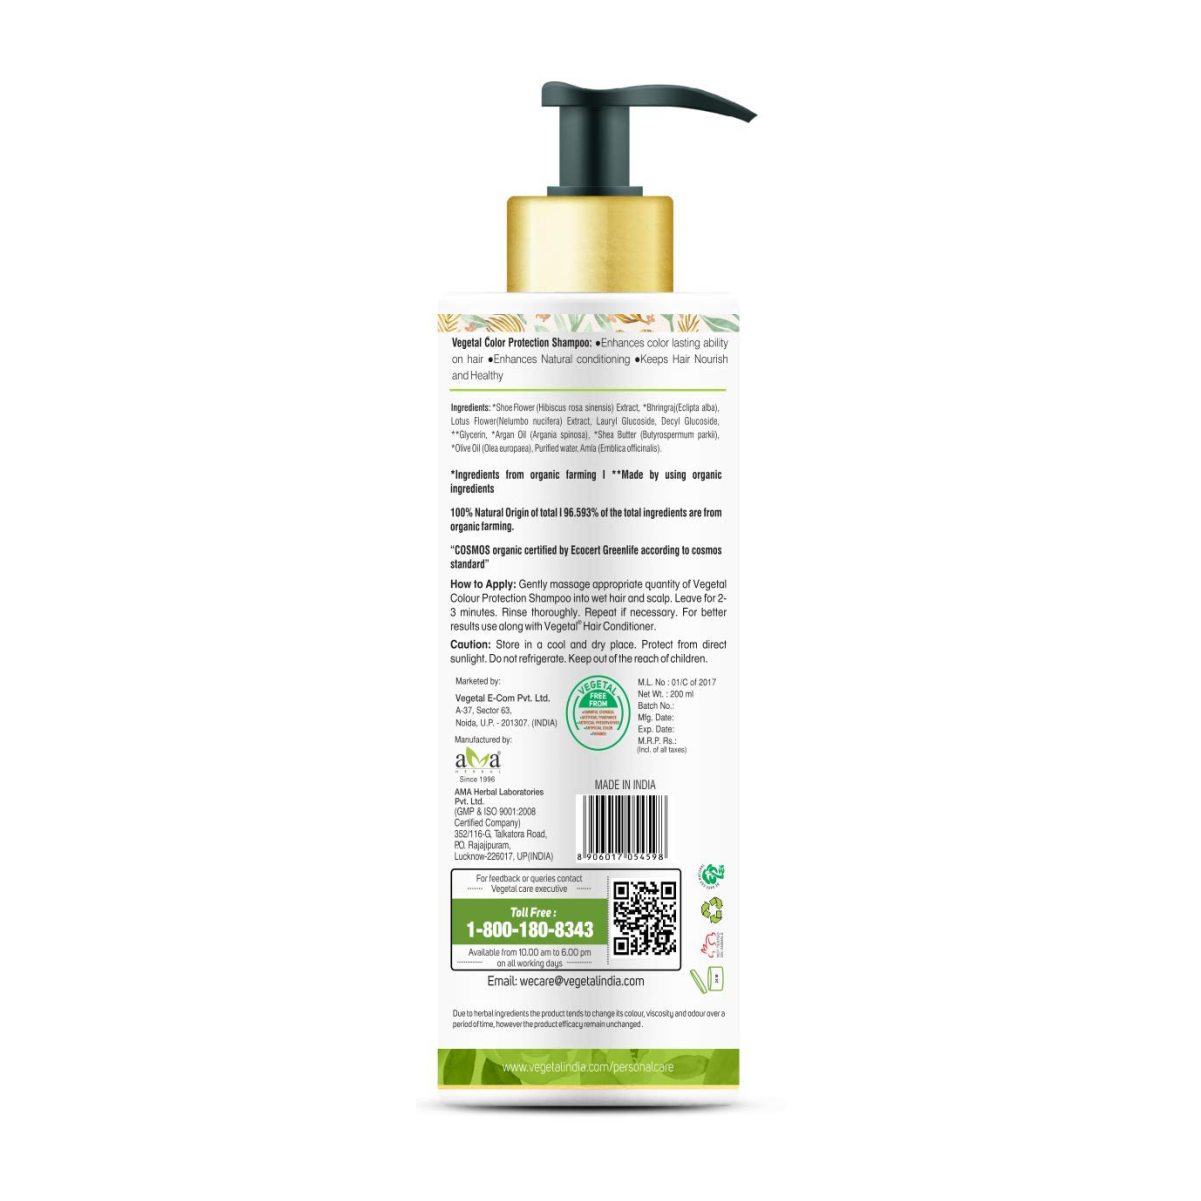 Vegetal Color Protection Shampoo